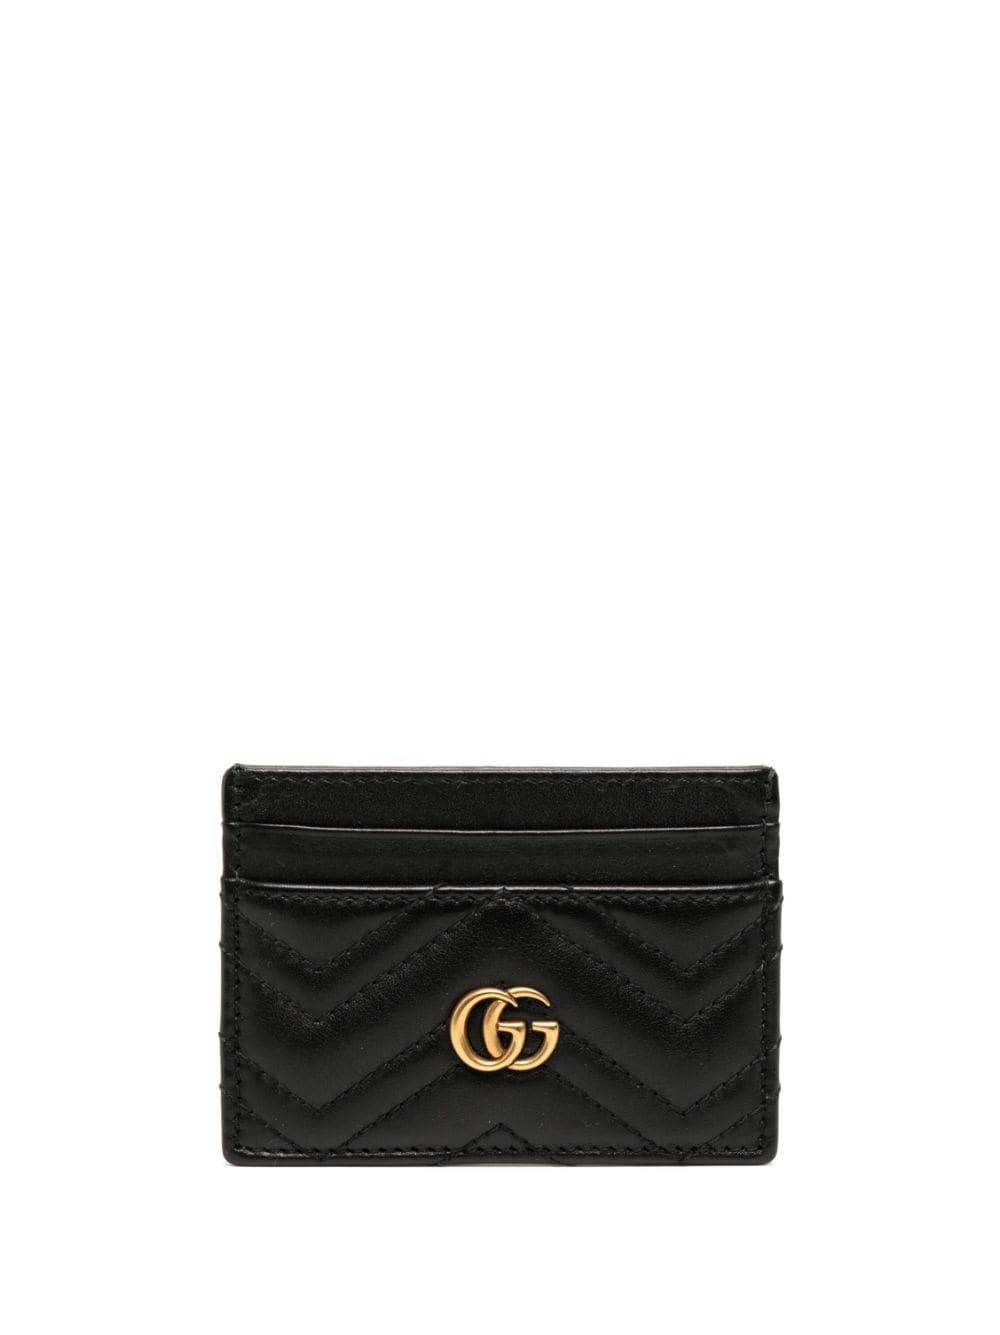 Women's or Men's Gucci Marmont Wallet